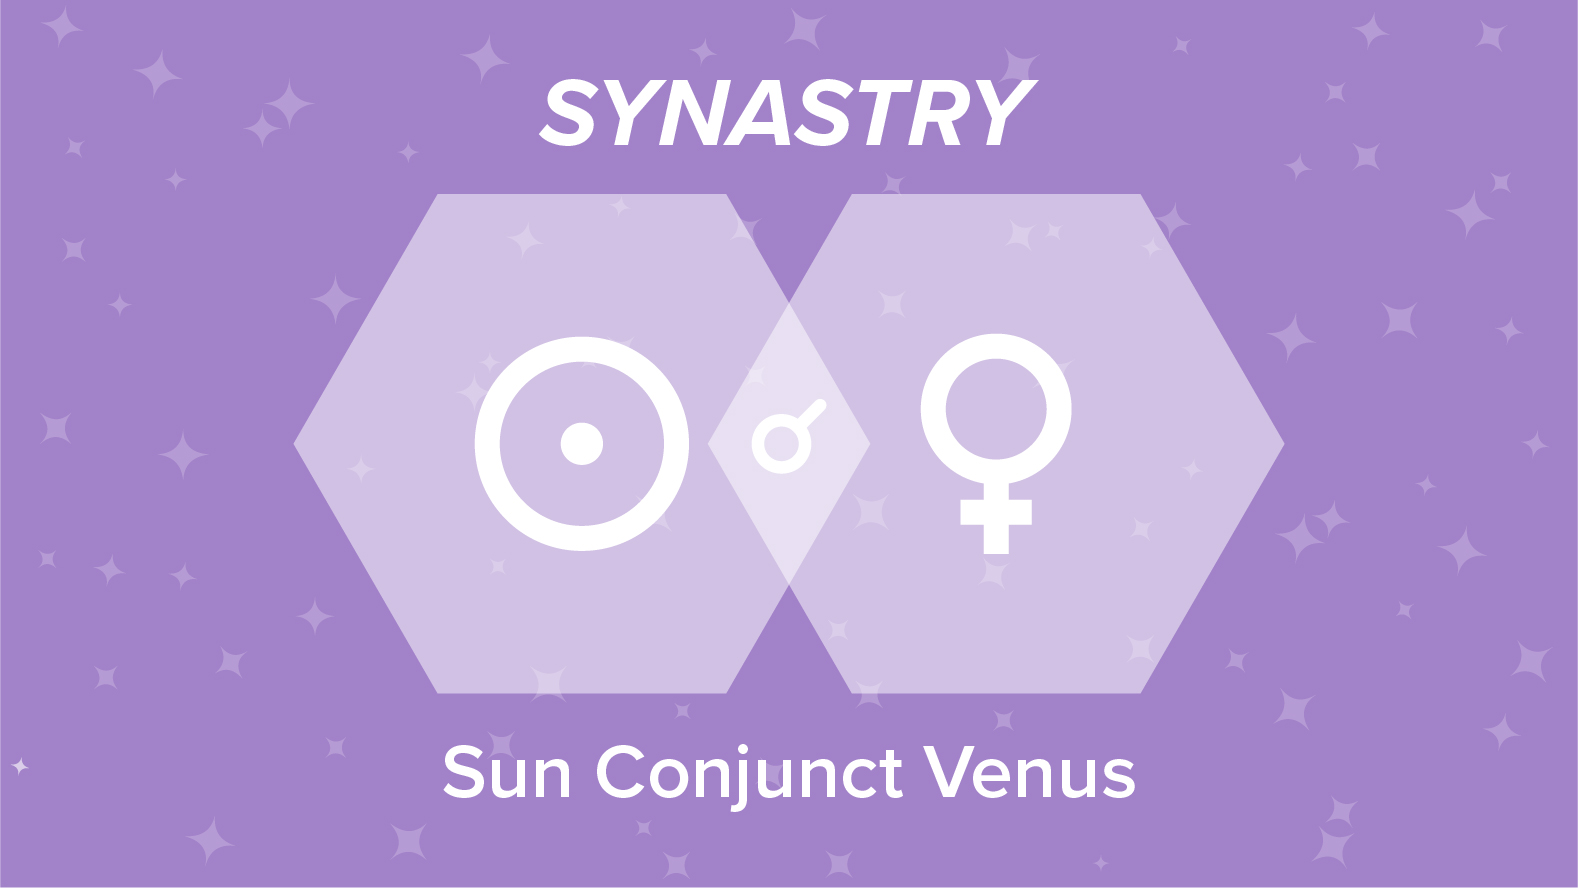 Sun Conjunct Venus Synastry